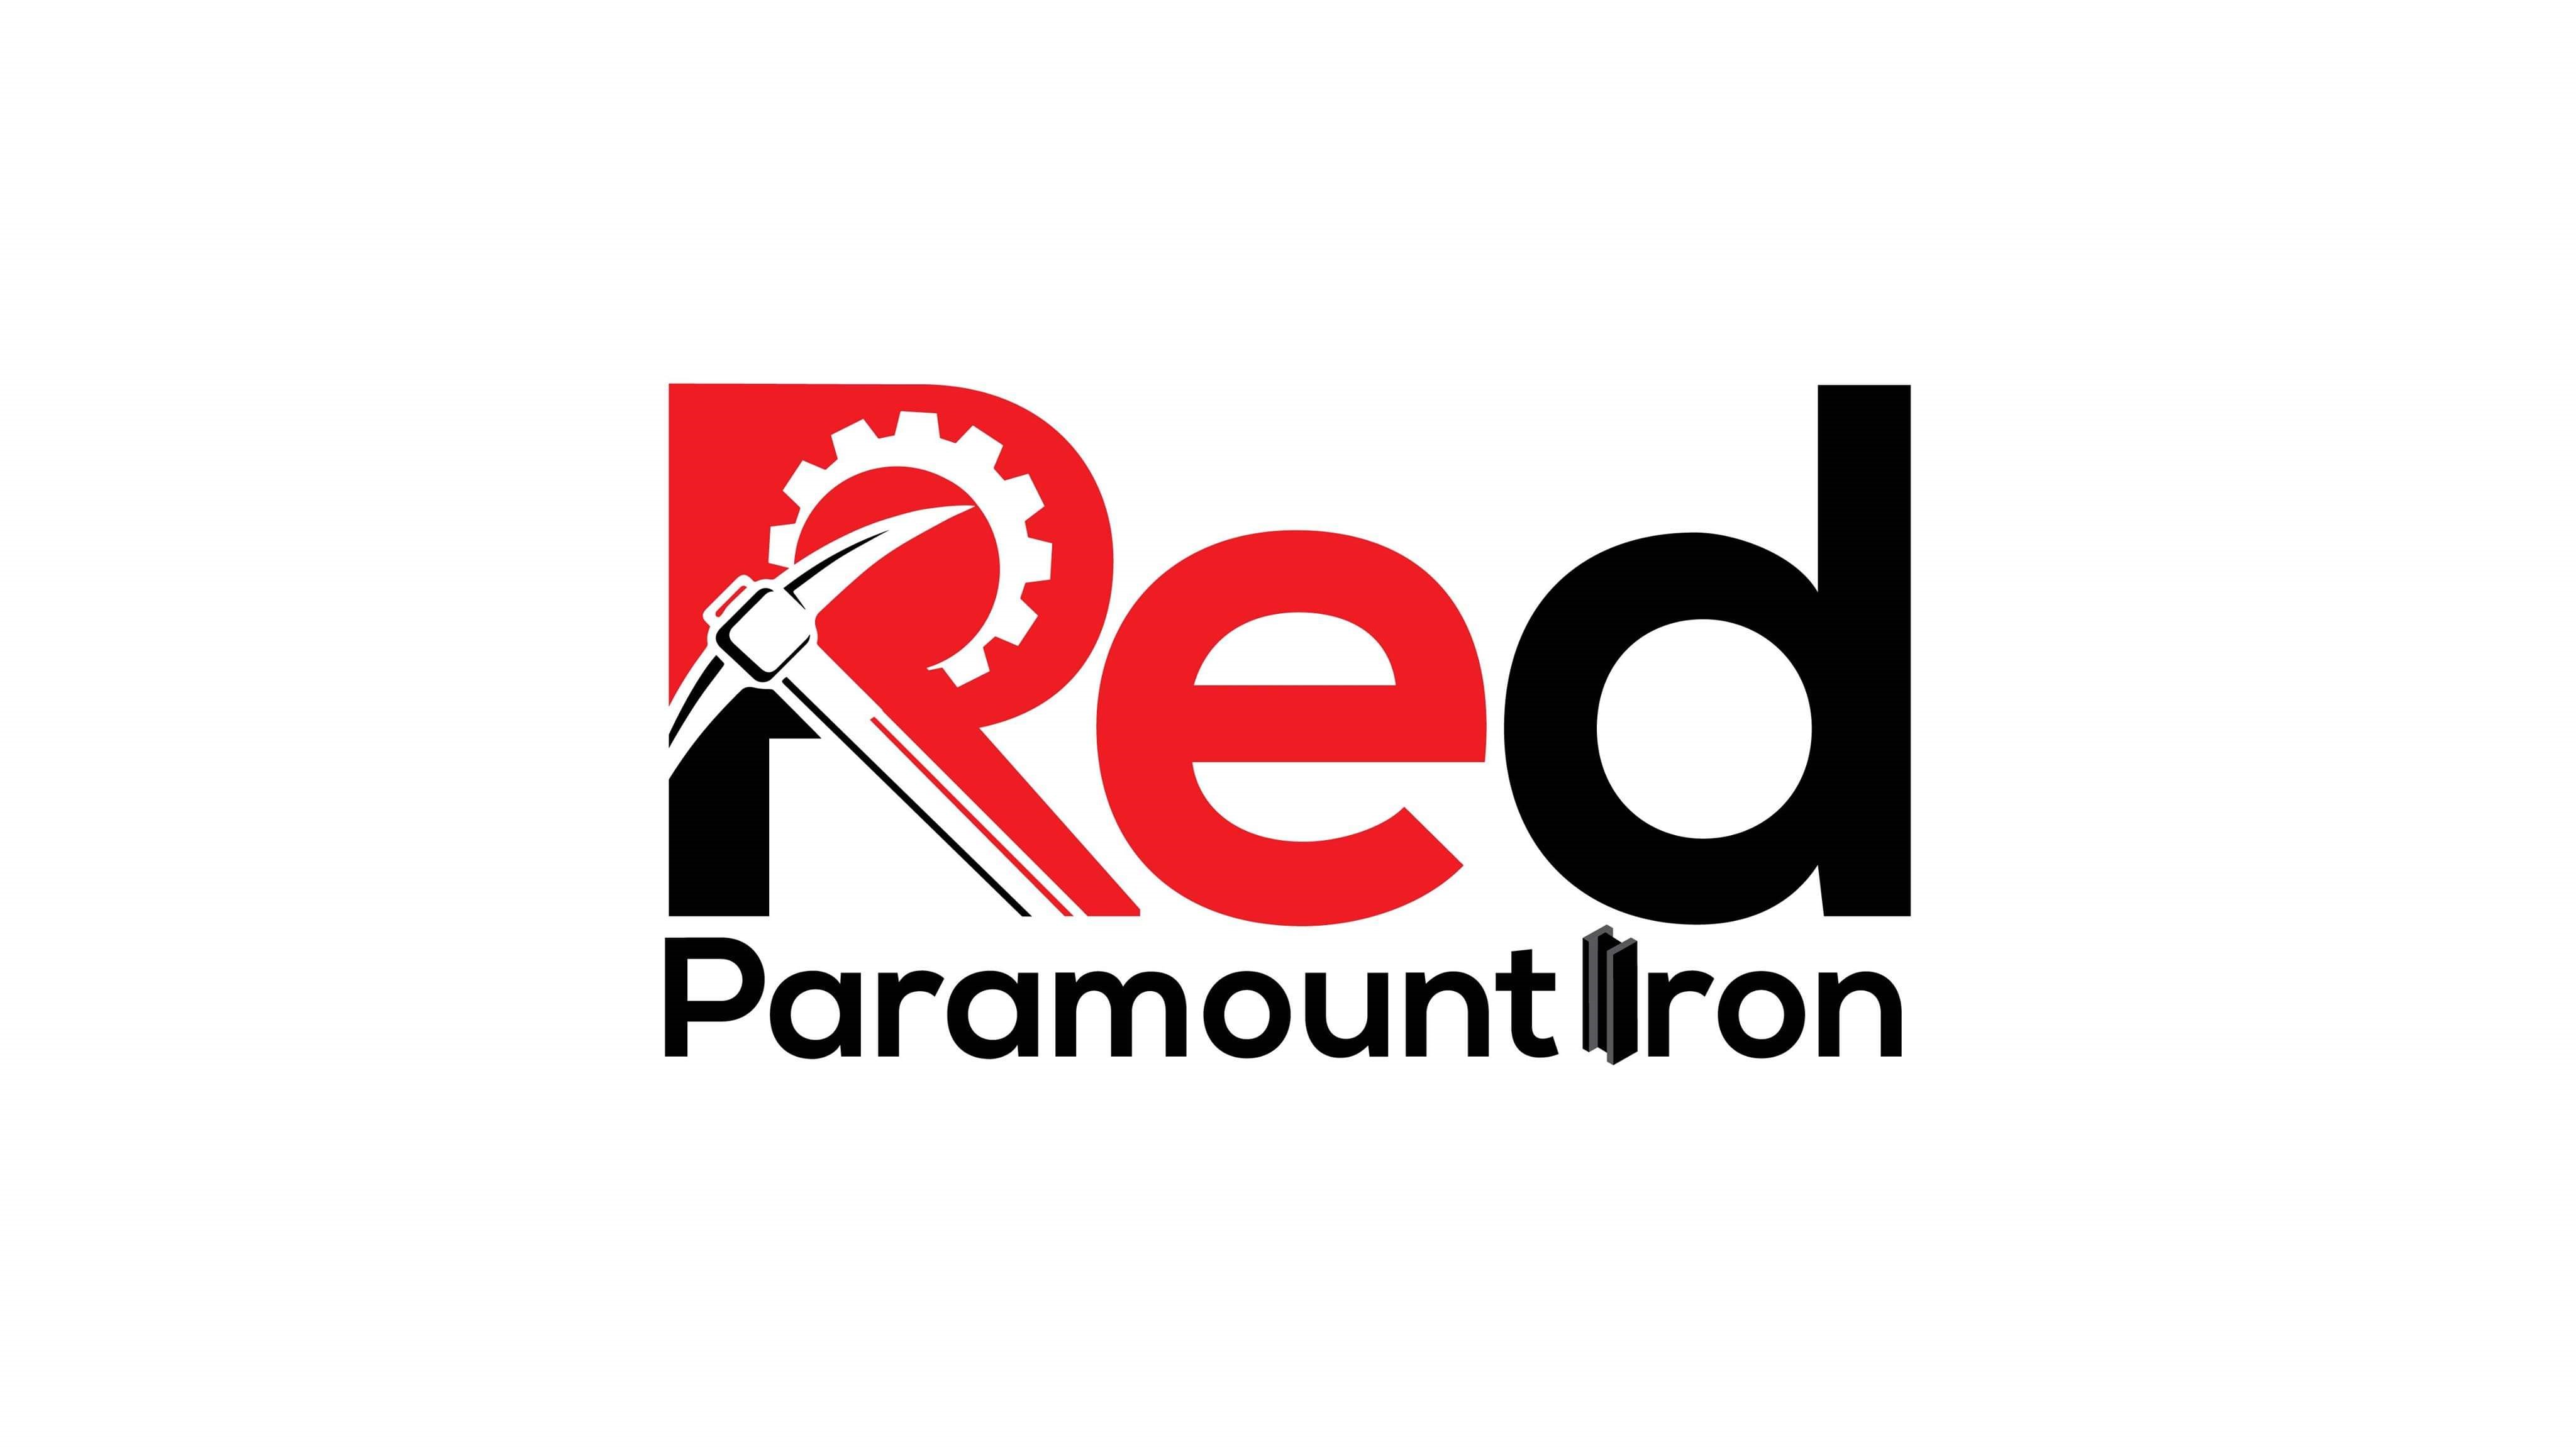 Red Paramount Iron Ltd. 